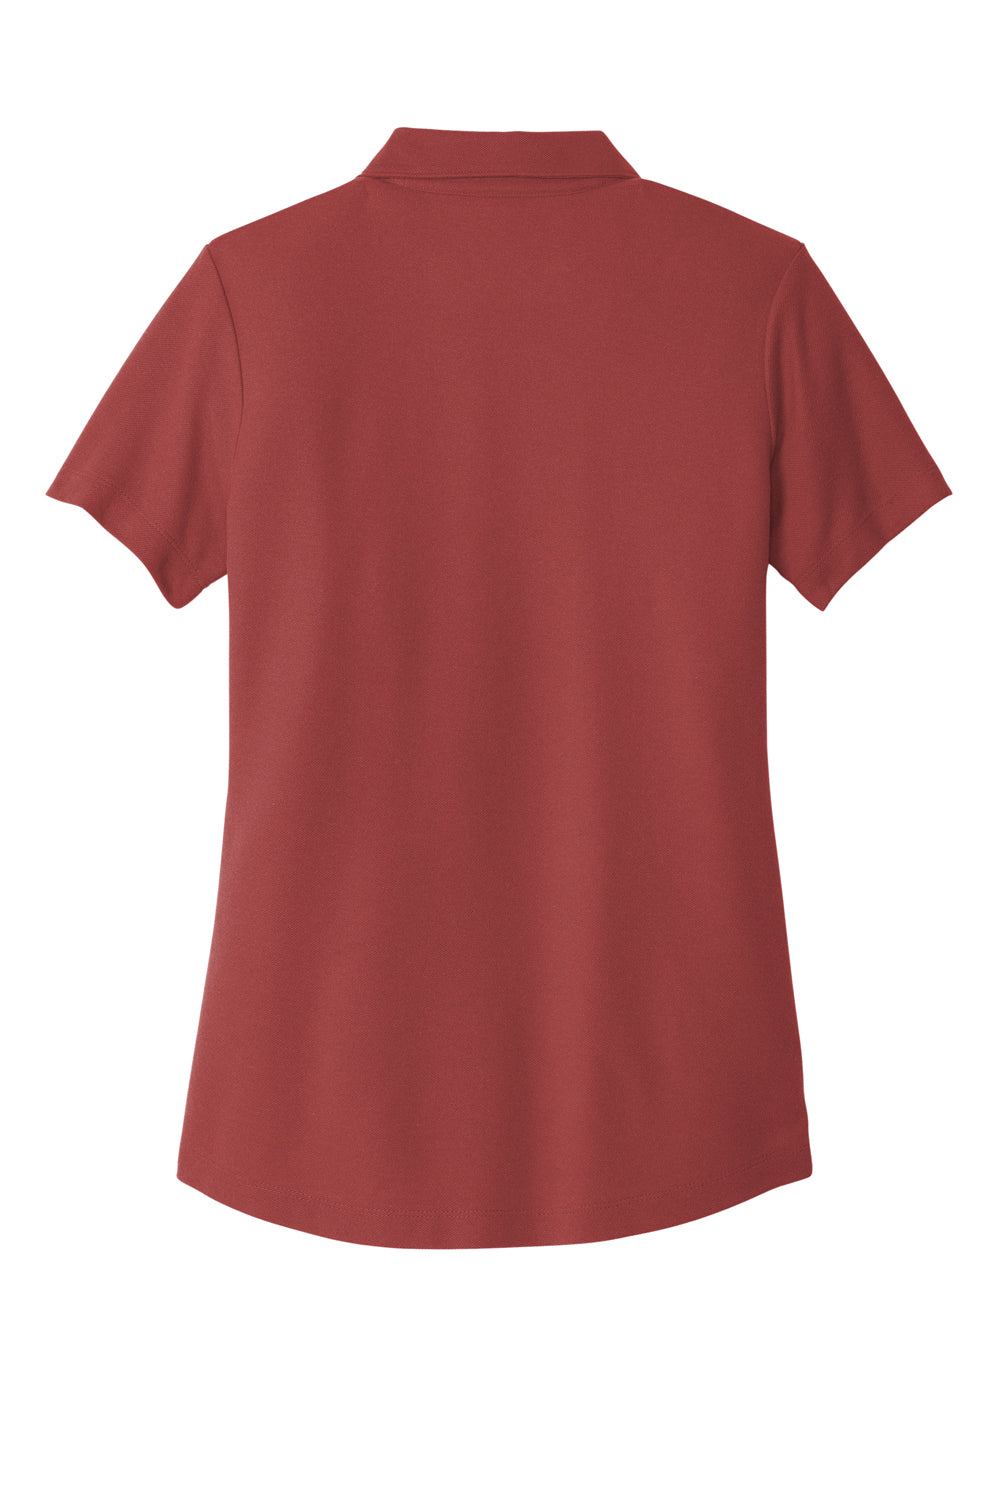 Port Authority LK867 Womens C-FREE Pique Short Sleeve Polo Shirt Garnet Red Flat Back